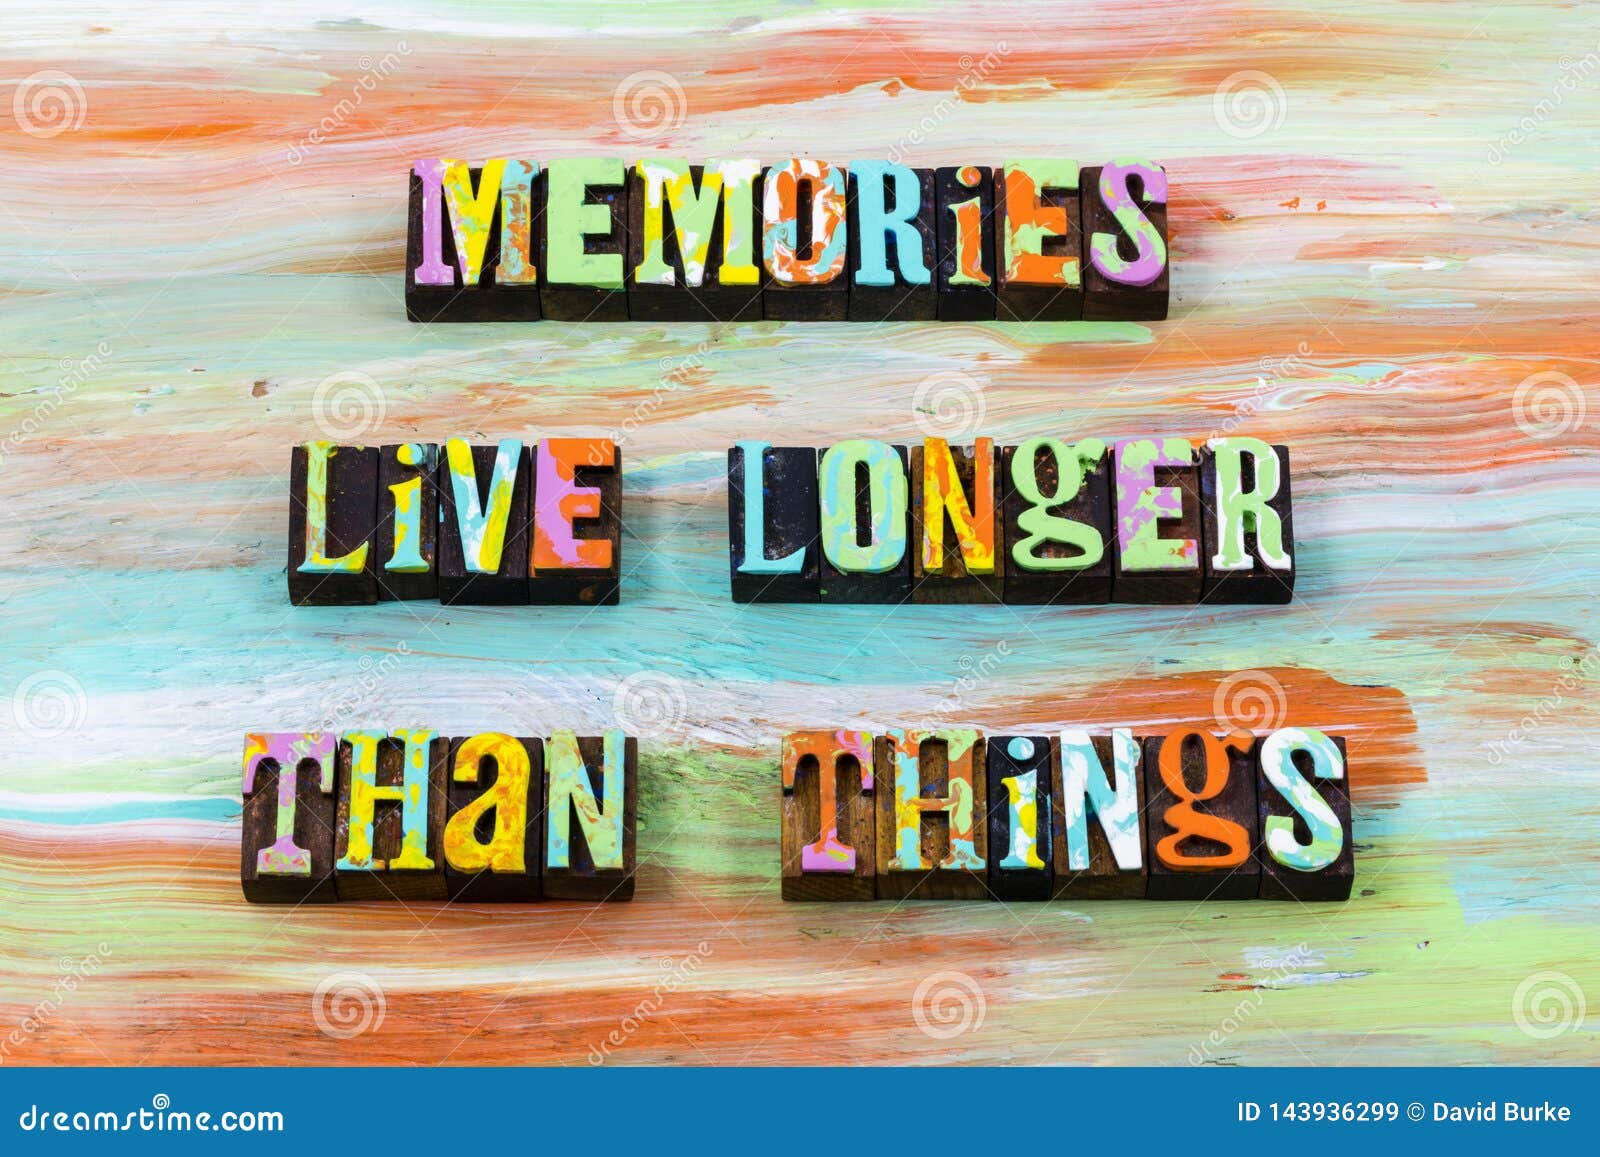 good memories live past now future remember memory love